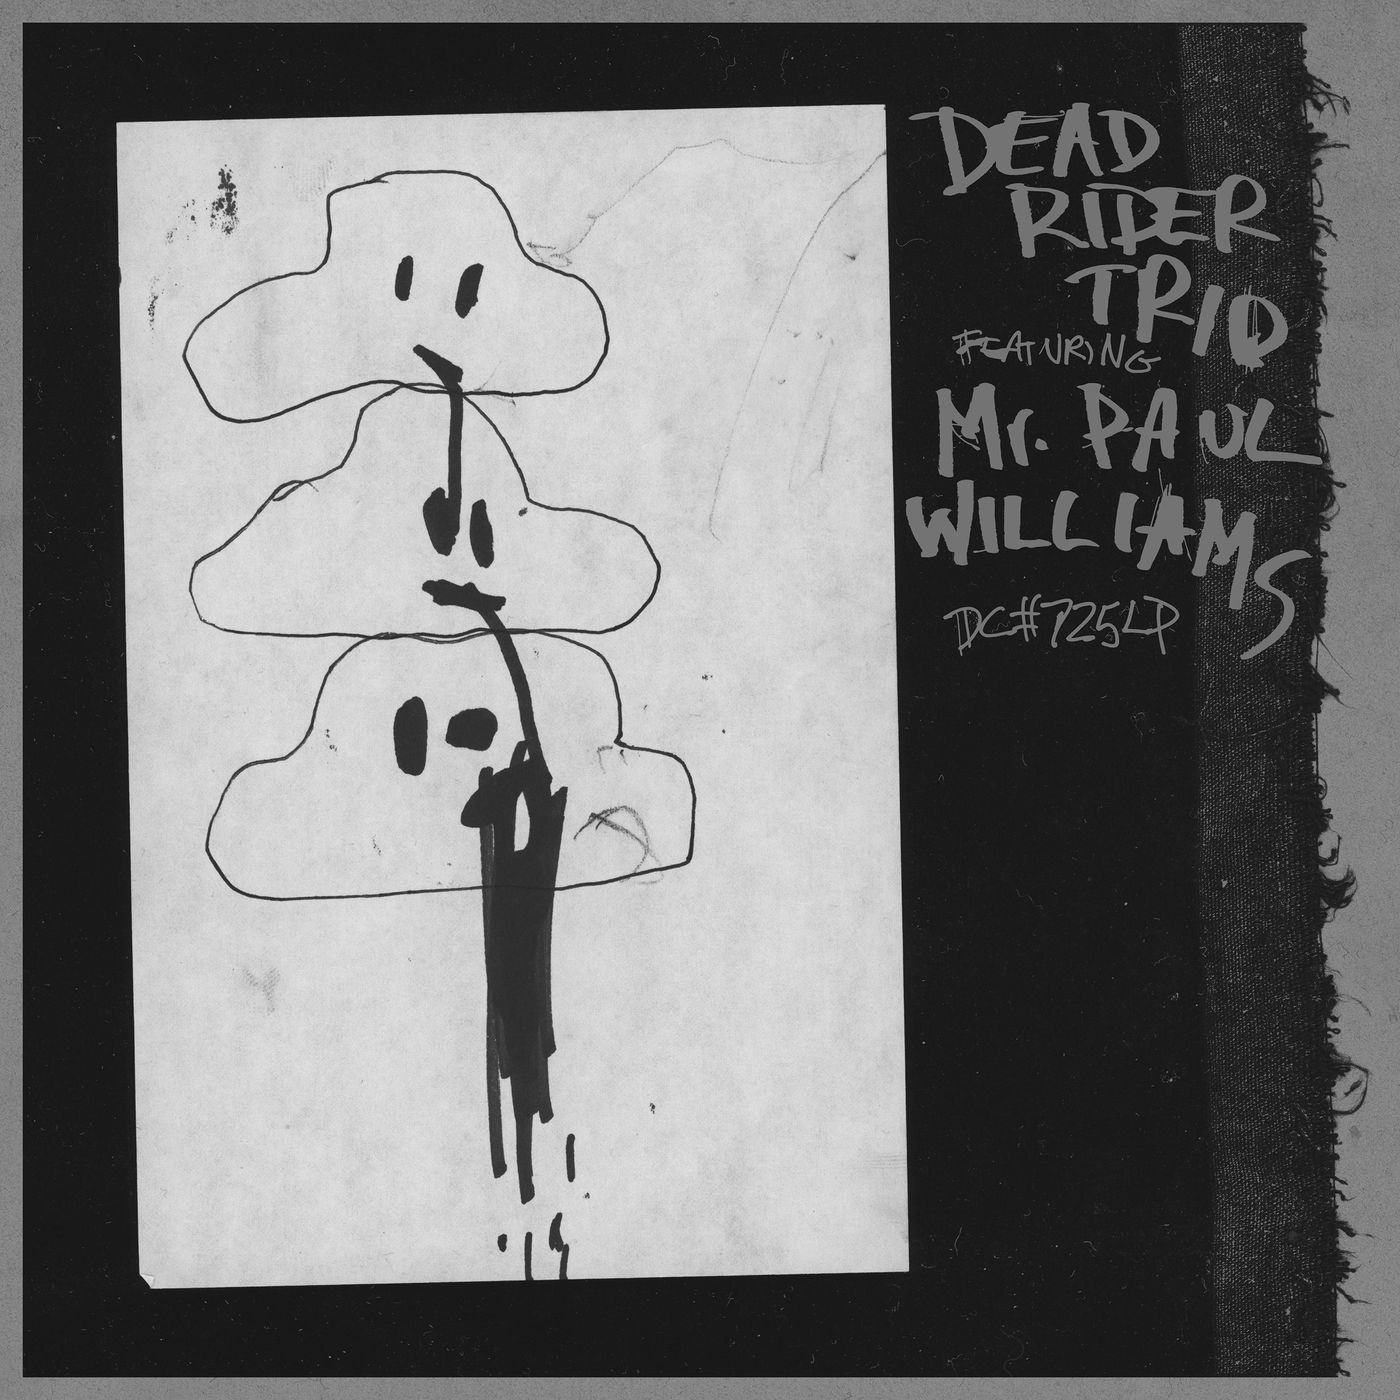 Dead Rider - Dead Rider Trio featuring Mr. Paul Williams (2018)